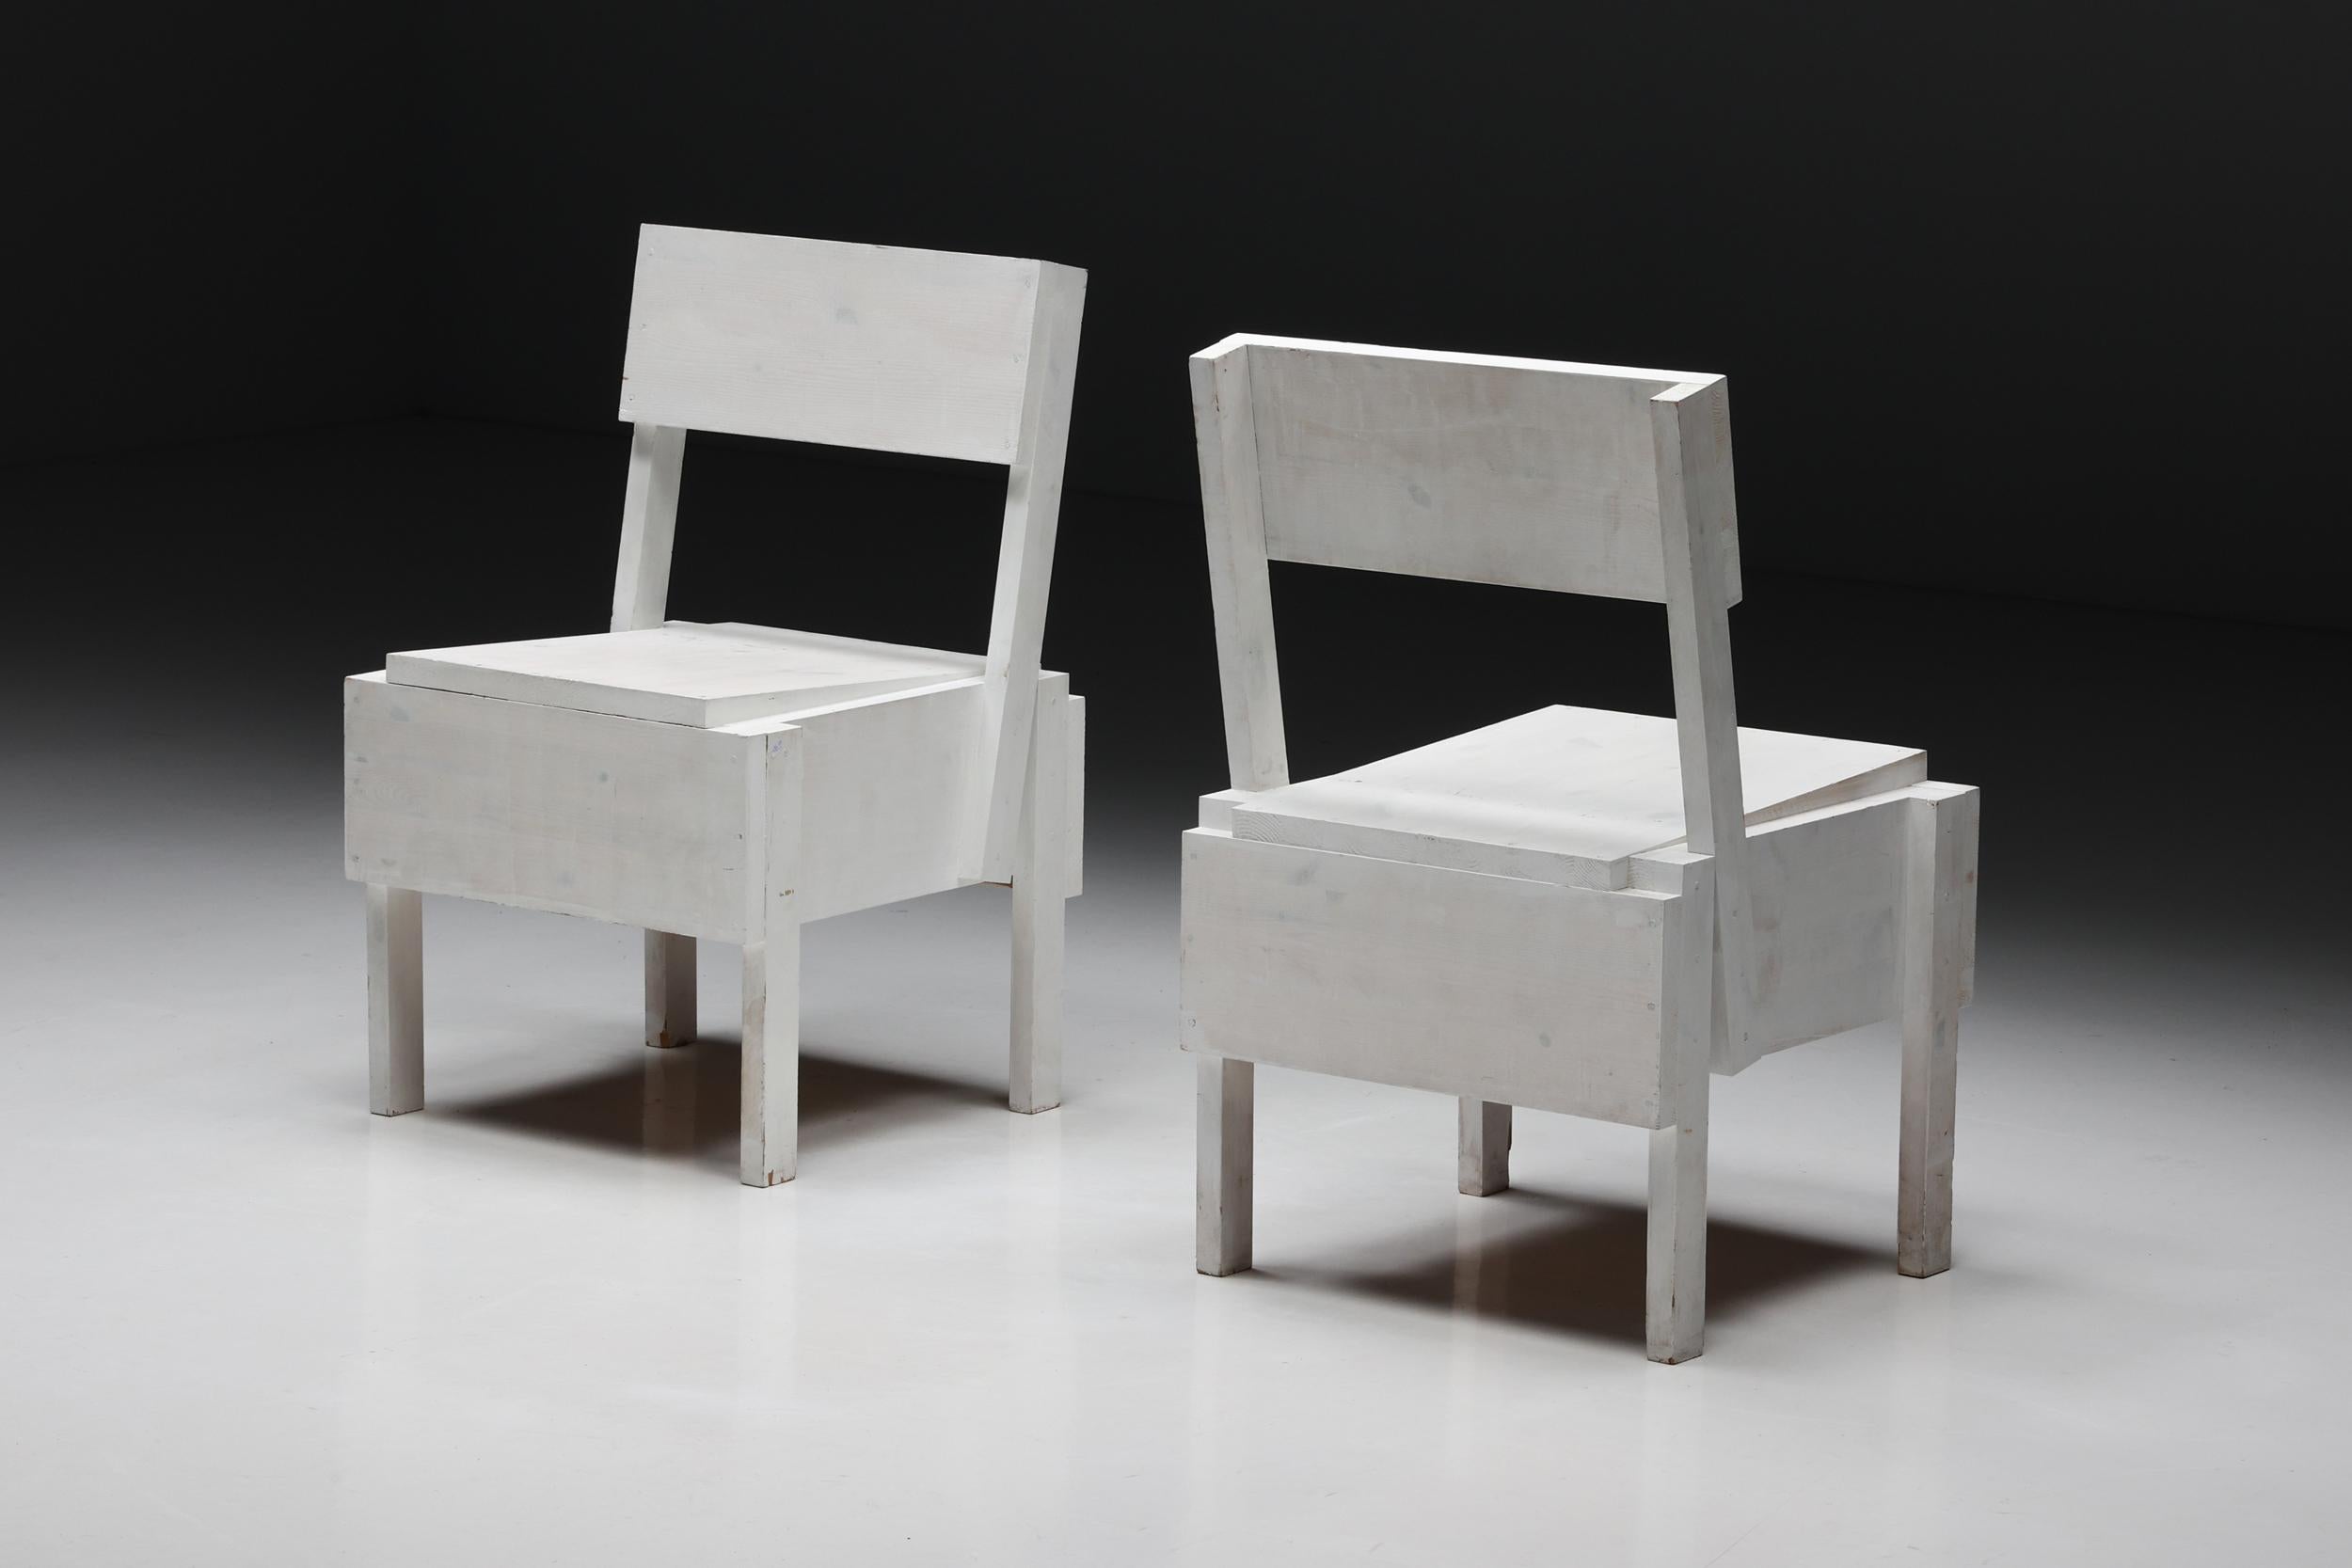 Enzo Mari; Sedia Chair; Artek; 1970s; Craftsmanship; Sedia 1; Autoprogettazione; Italy; Italian Designer; Italian Design; Finland; 2010; Finnish Furniture Brand Artek; 

‘Sedia 1’ is a self-assembly chair originally designed in 1974 by Italian